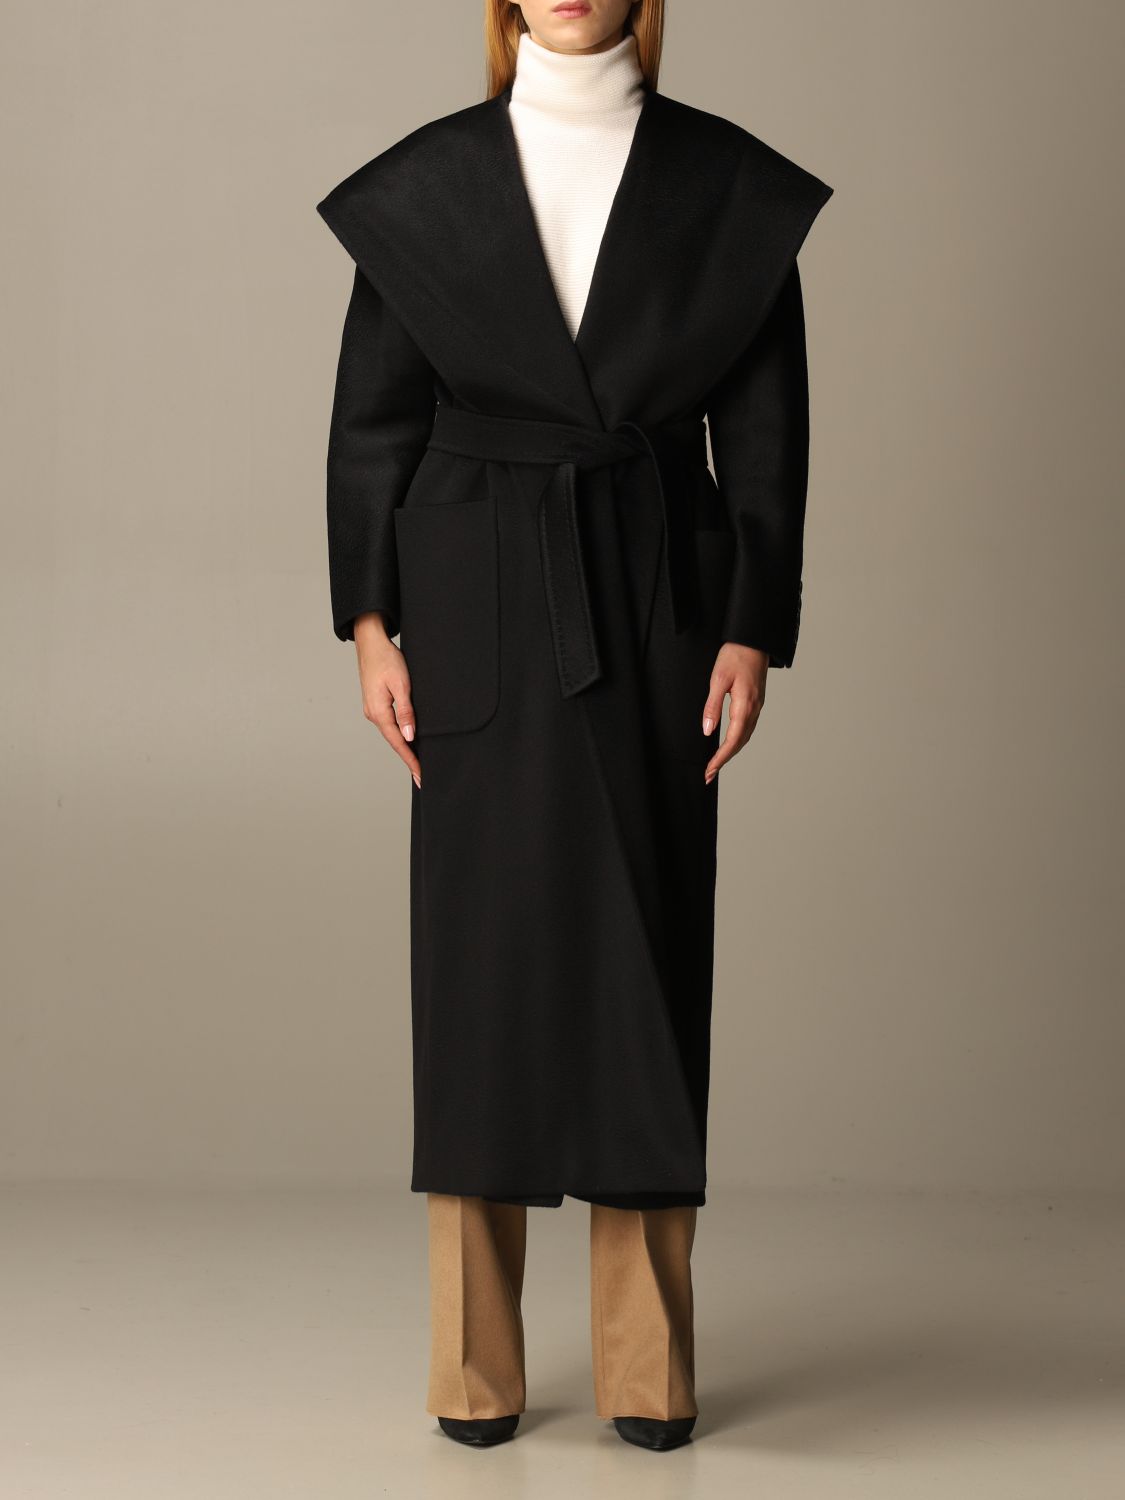 MAX MARA: Altea coat in wool and cashmere - Black | Max Mara coat ...